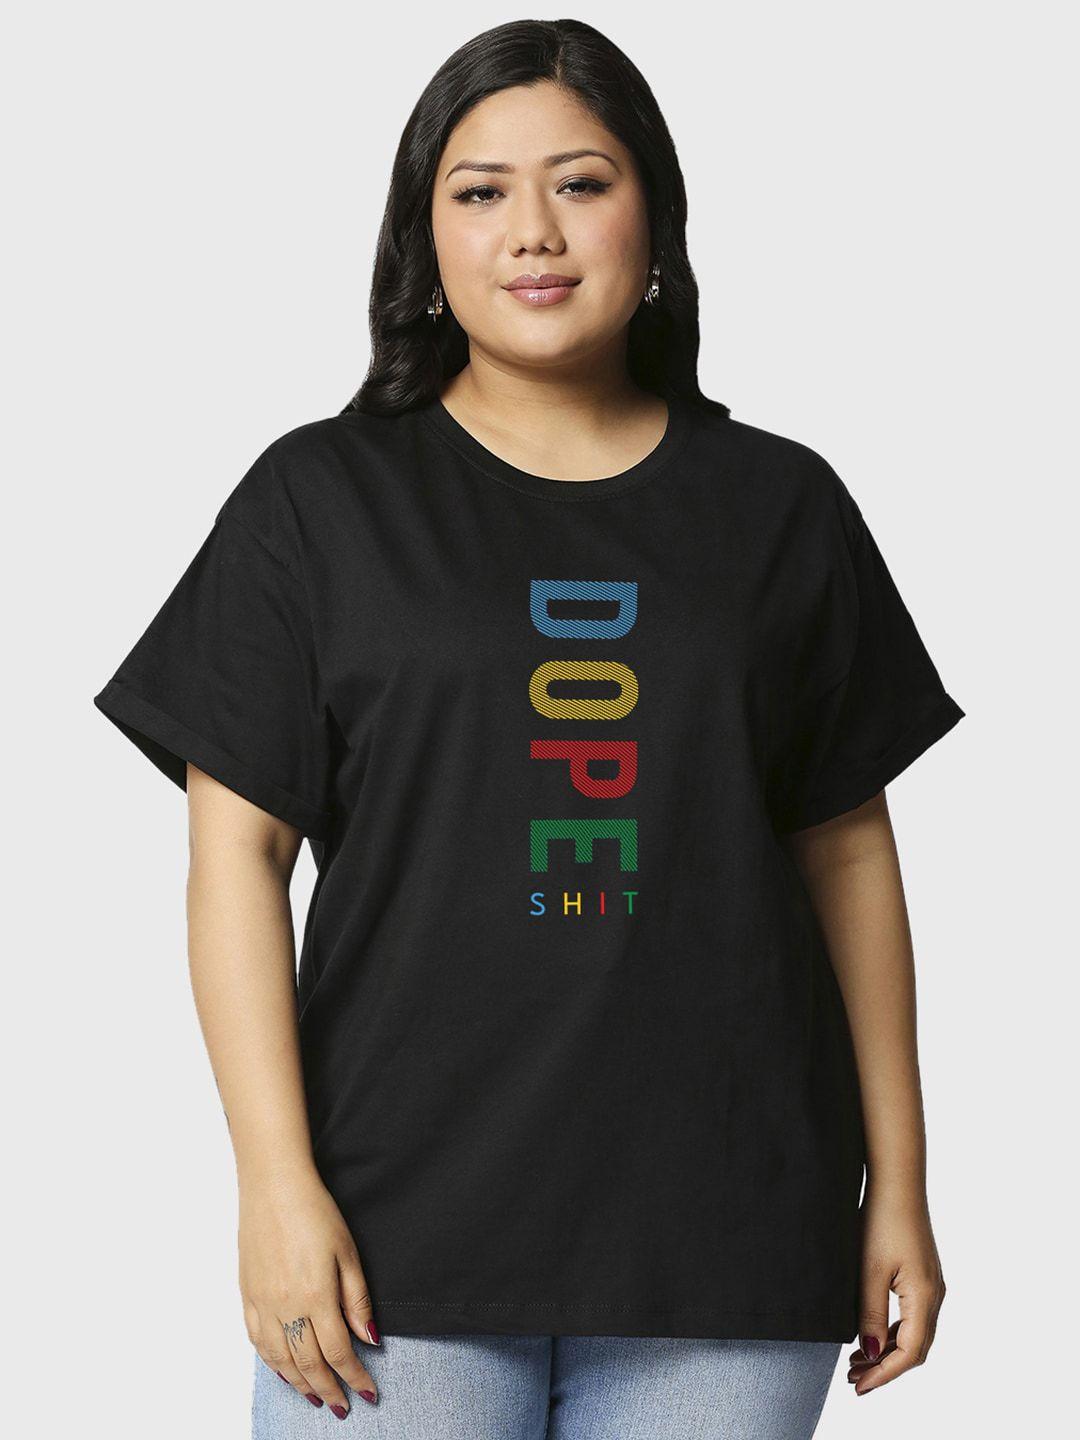 bewakoof dope shit typography print plus size boyfriend fit t-shirt